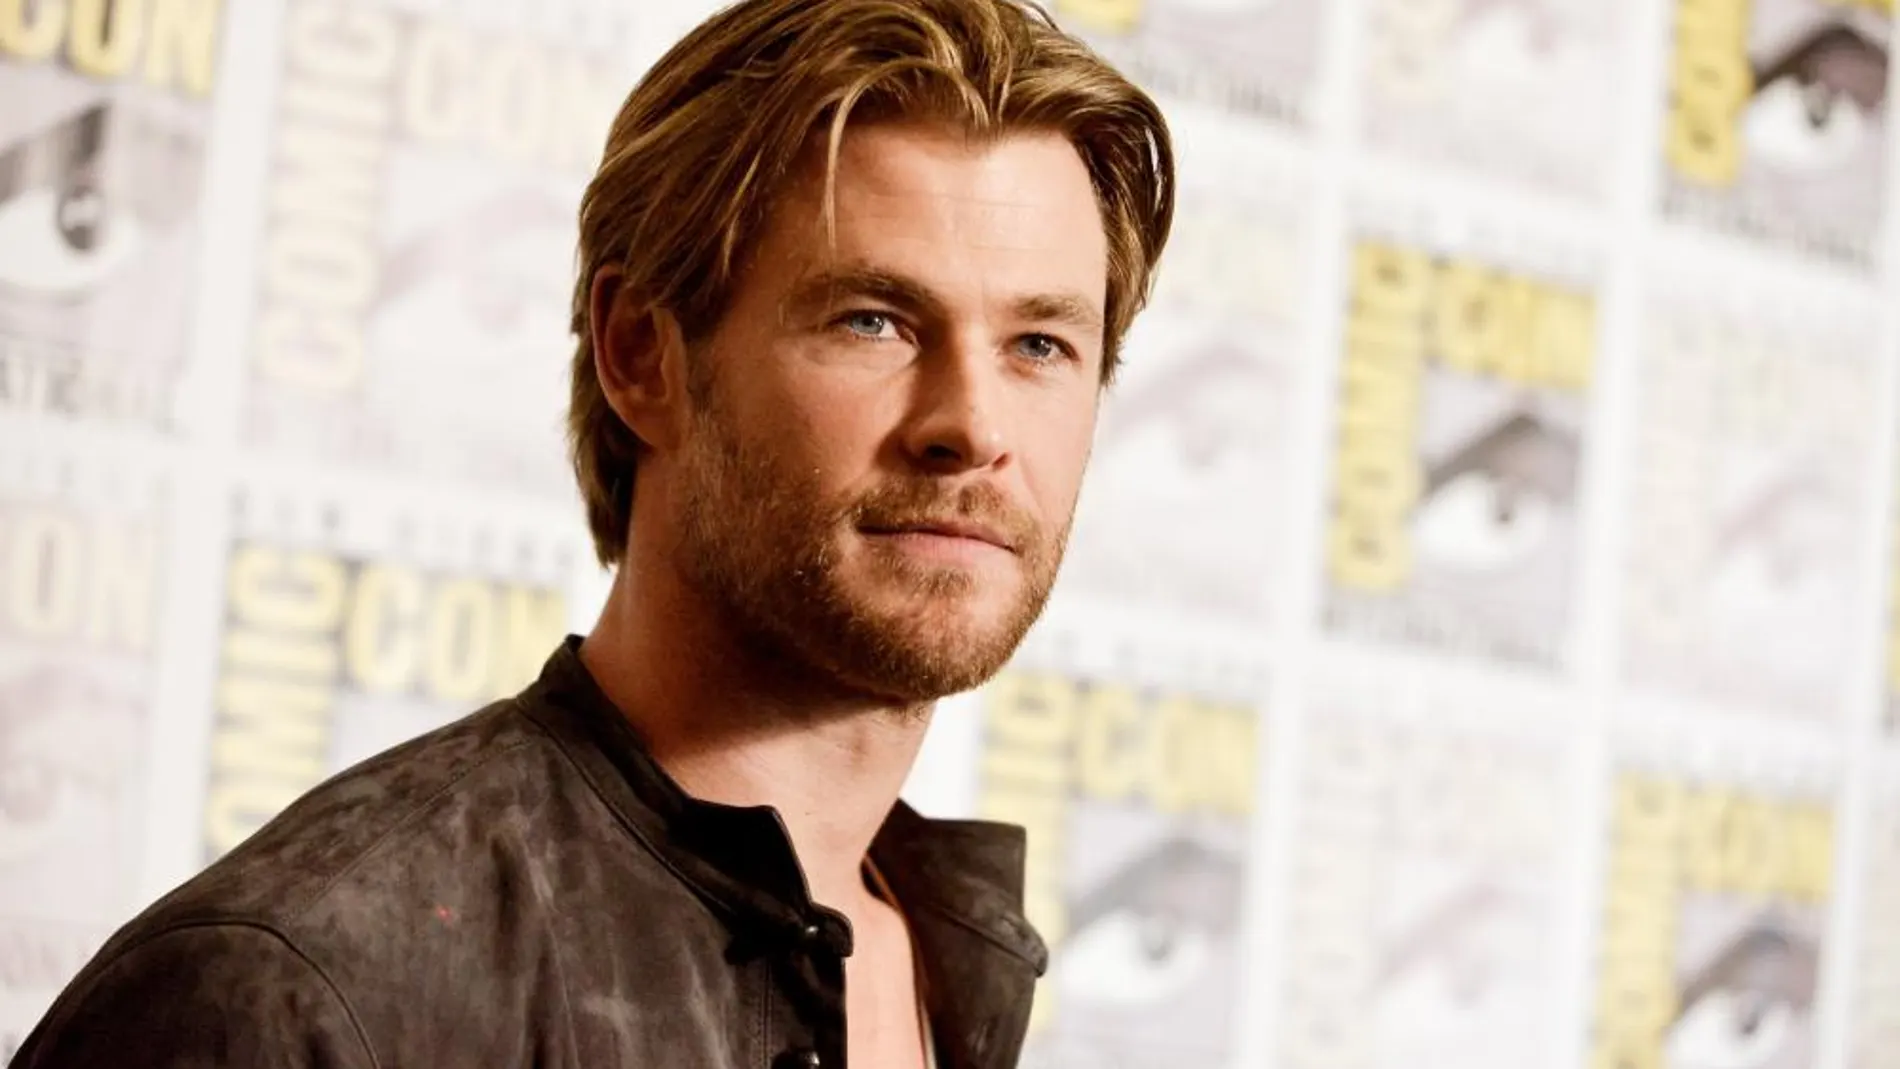 Chris Hemsworth  Fotos de thor, Hombres guapos, Hombres